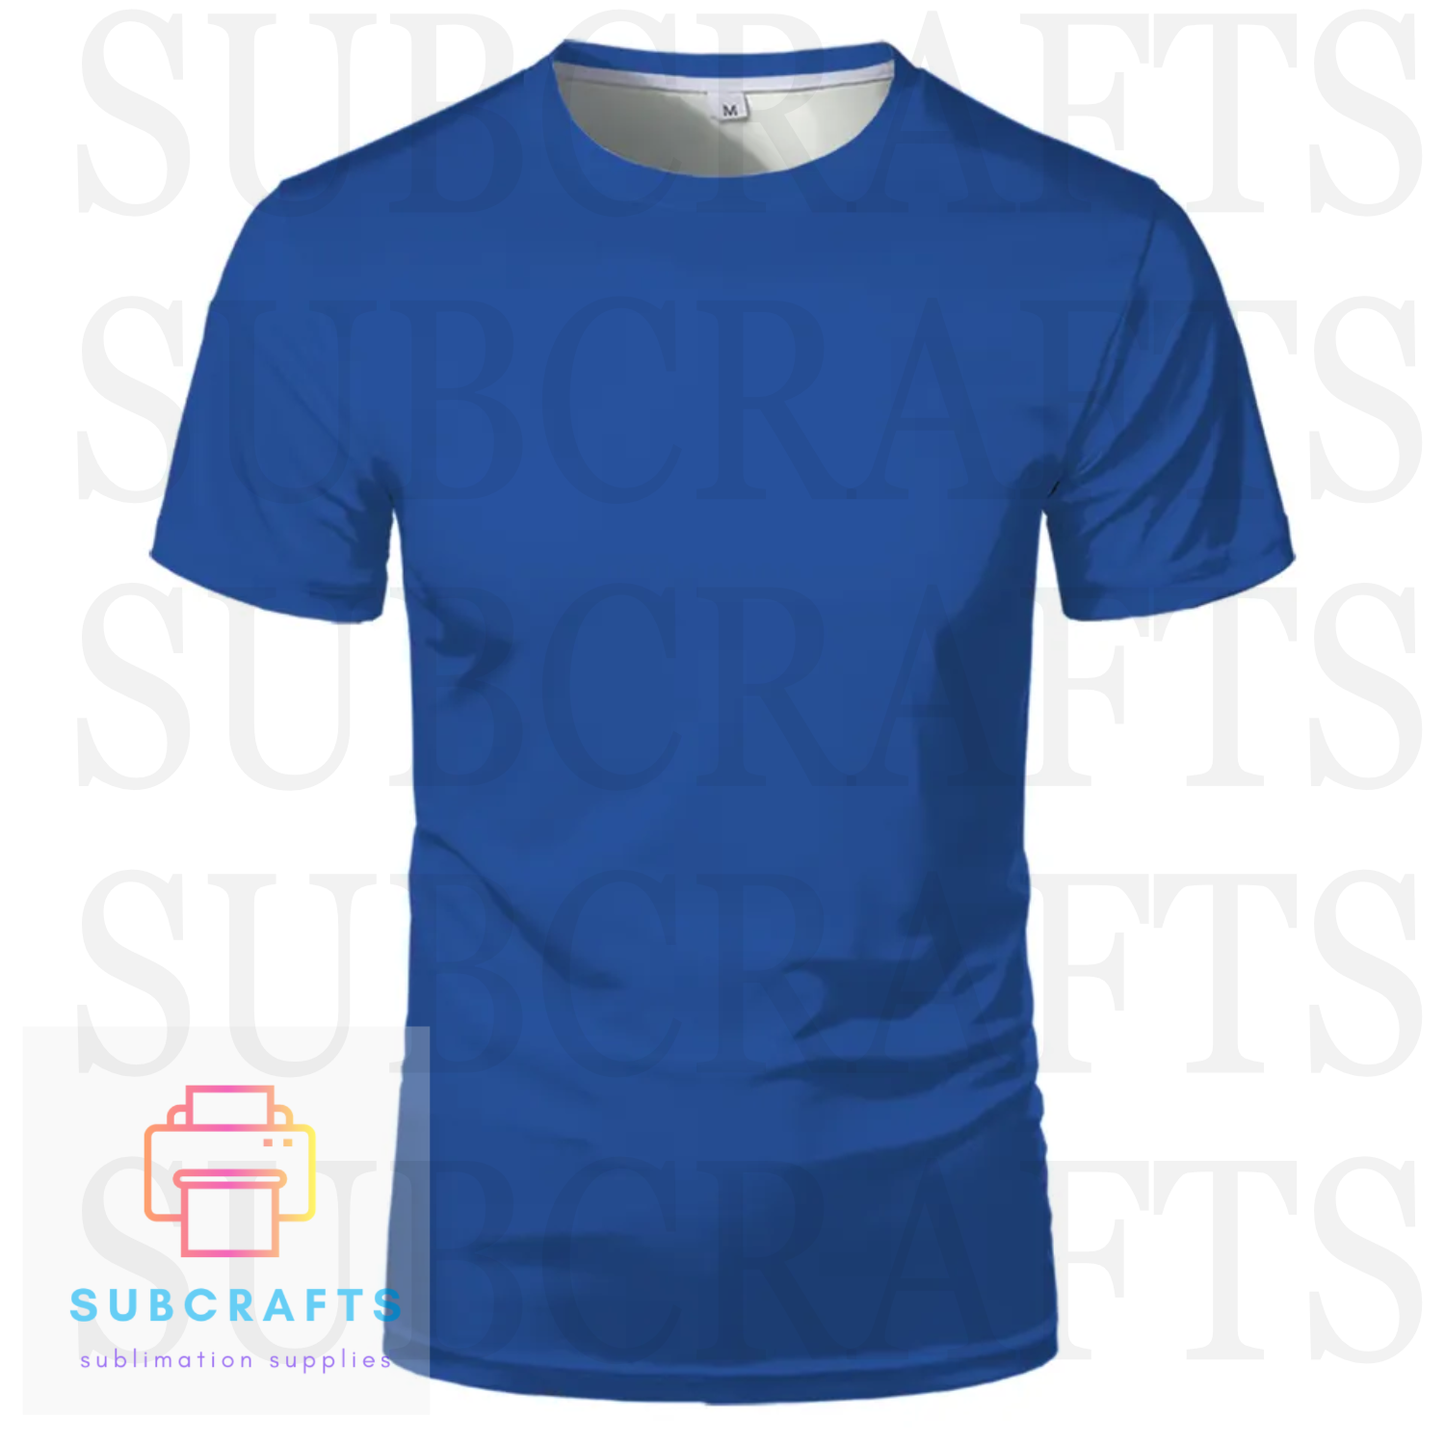 Solid color sublimation T-shirt